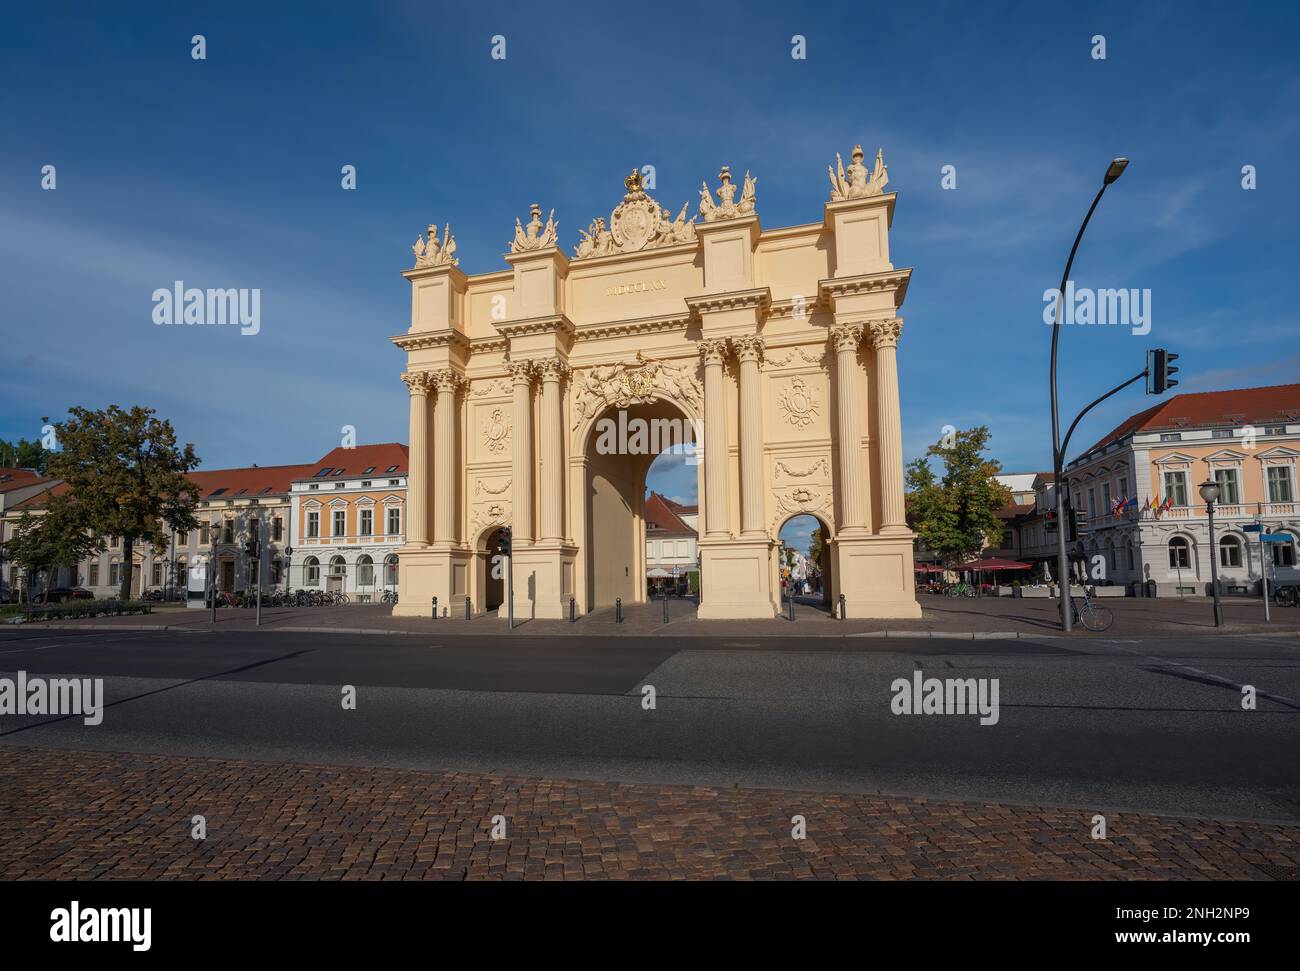 Porta di Brandeburgo (Brandenburger Tor) in Piazza Luisenplatz - Potsdam, Brandeburgo, Germania Foto Stock